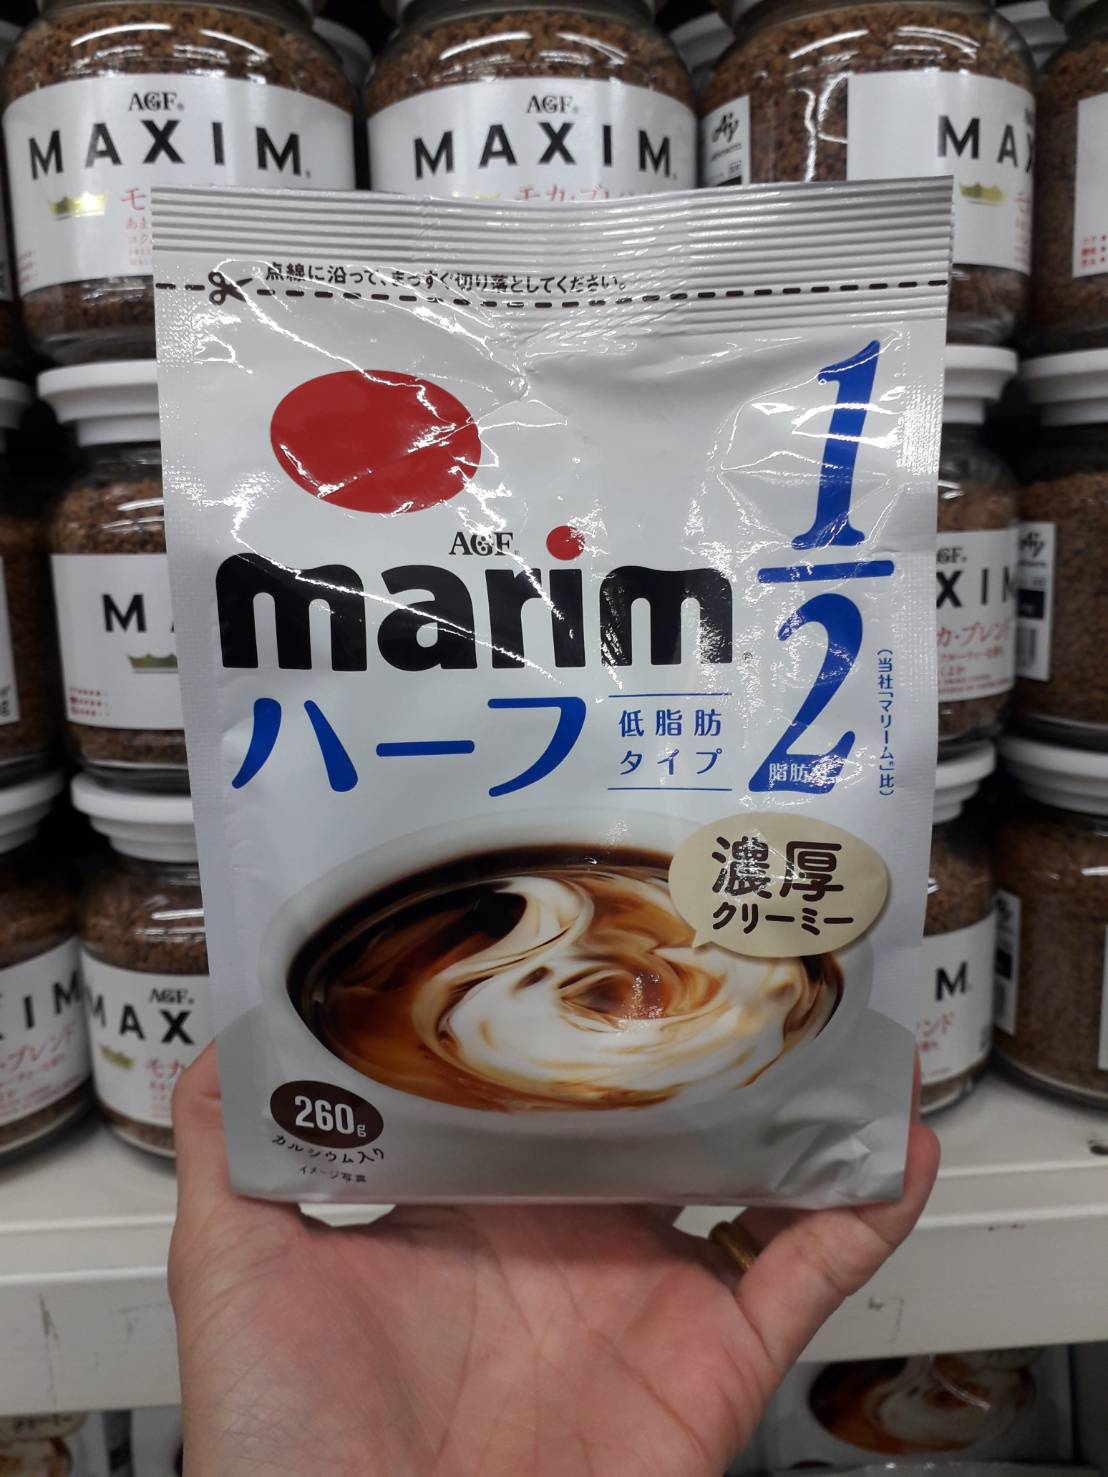 AGF Marim Cream Hokkaido milk ครีมเทียมไขมัน1/2 ผลิตจากนมวัวแท้ ฮอกไกโด 260g.